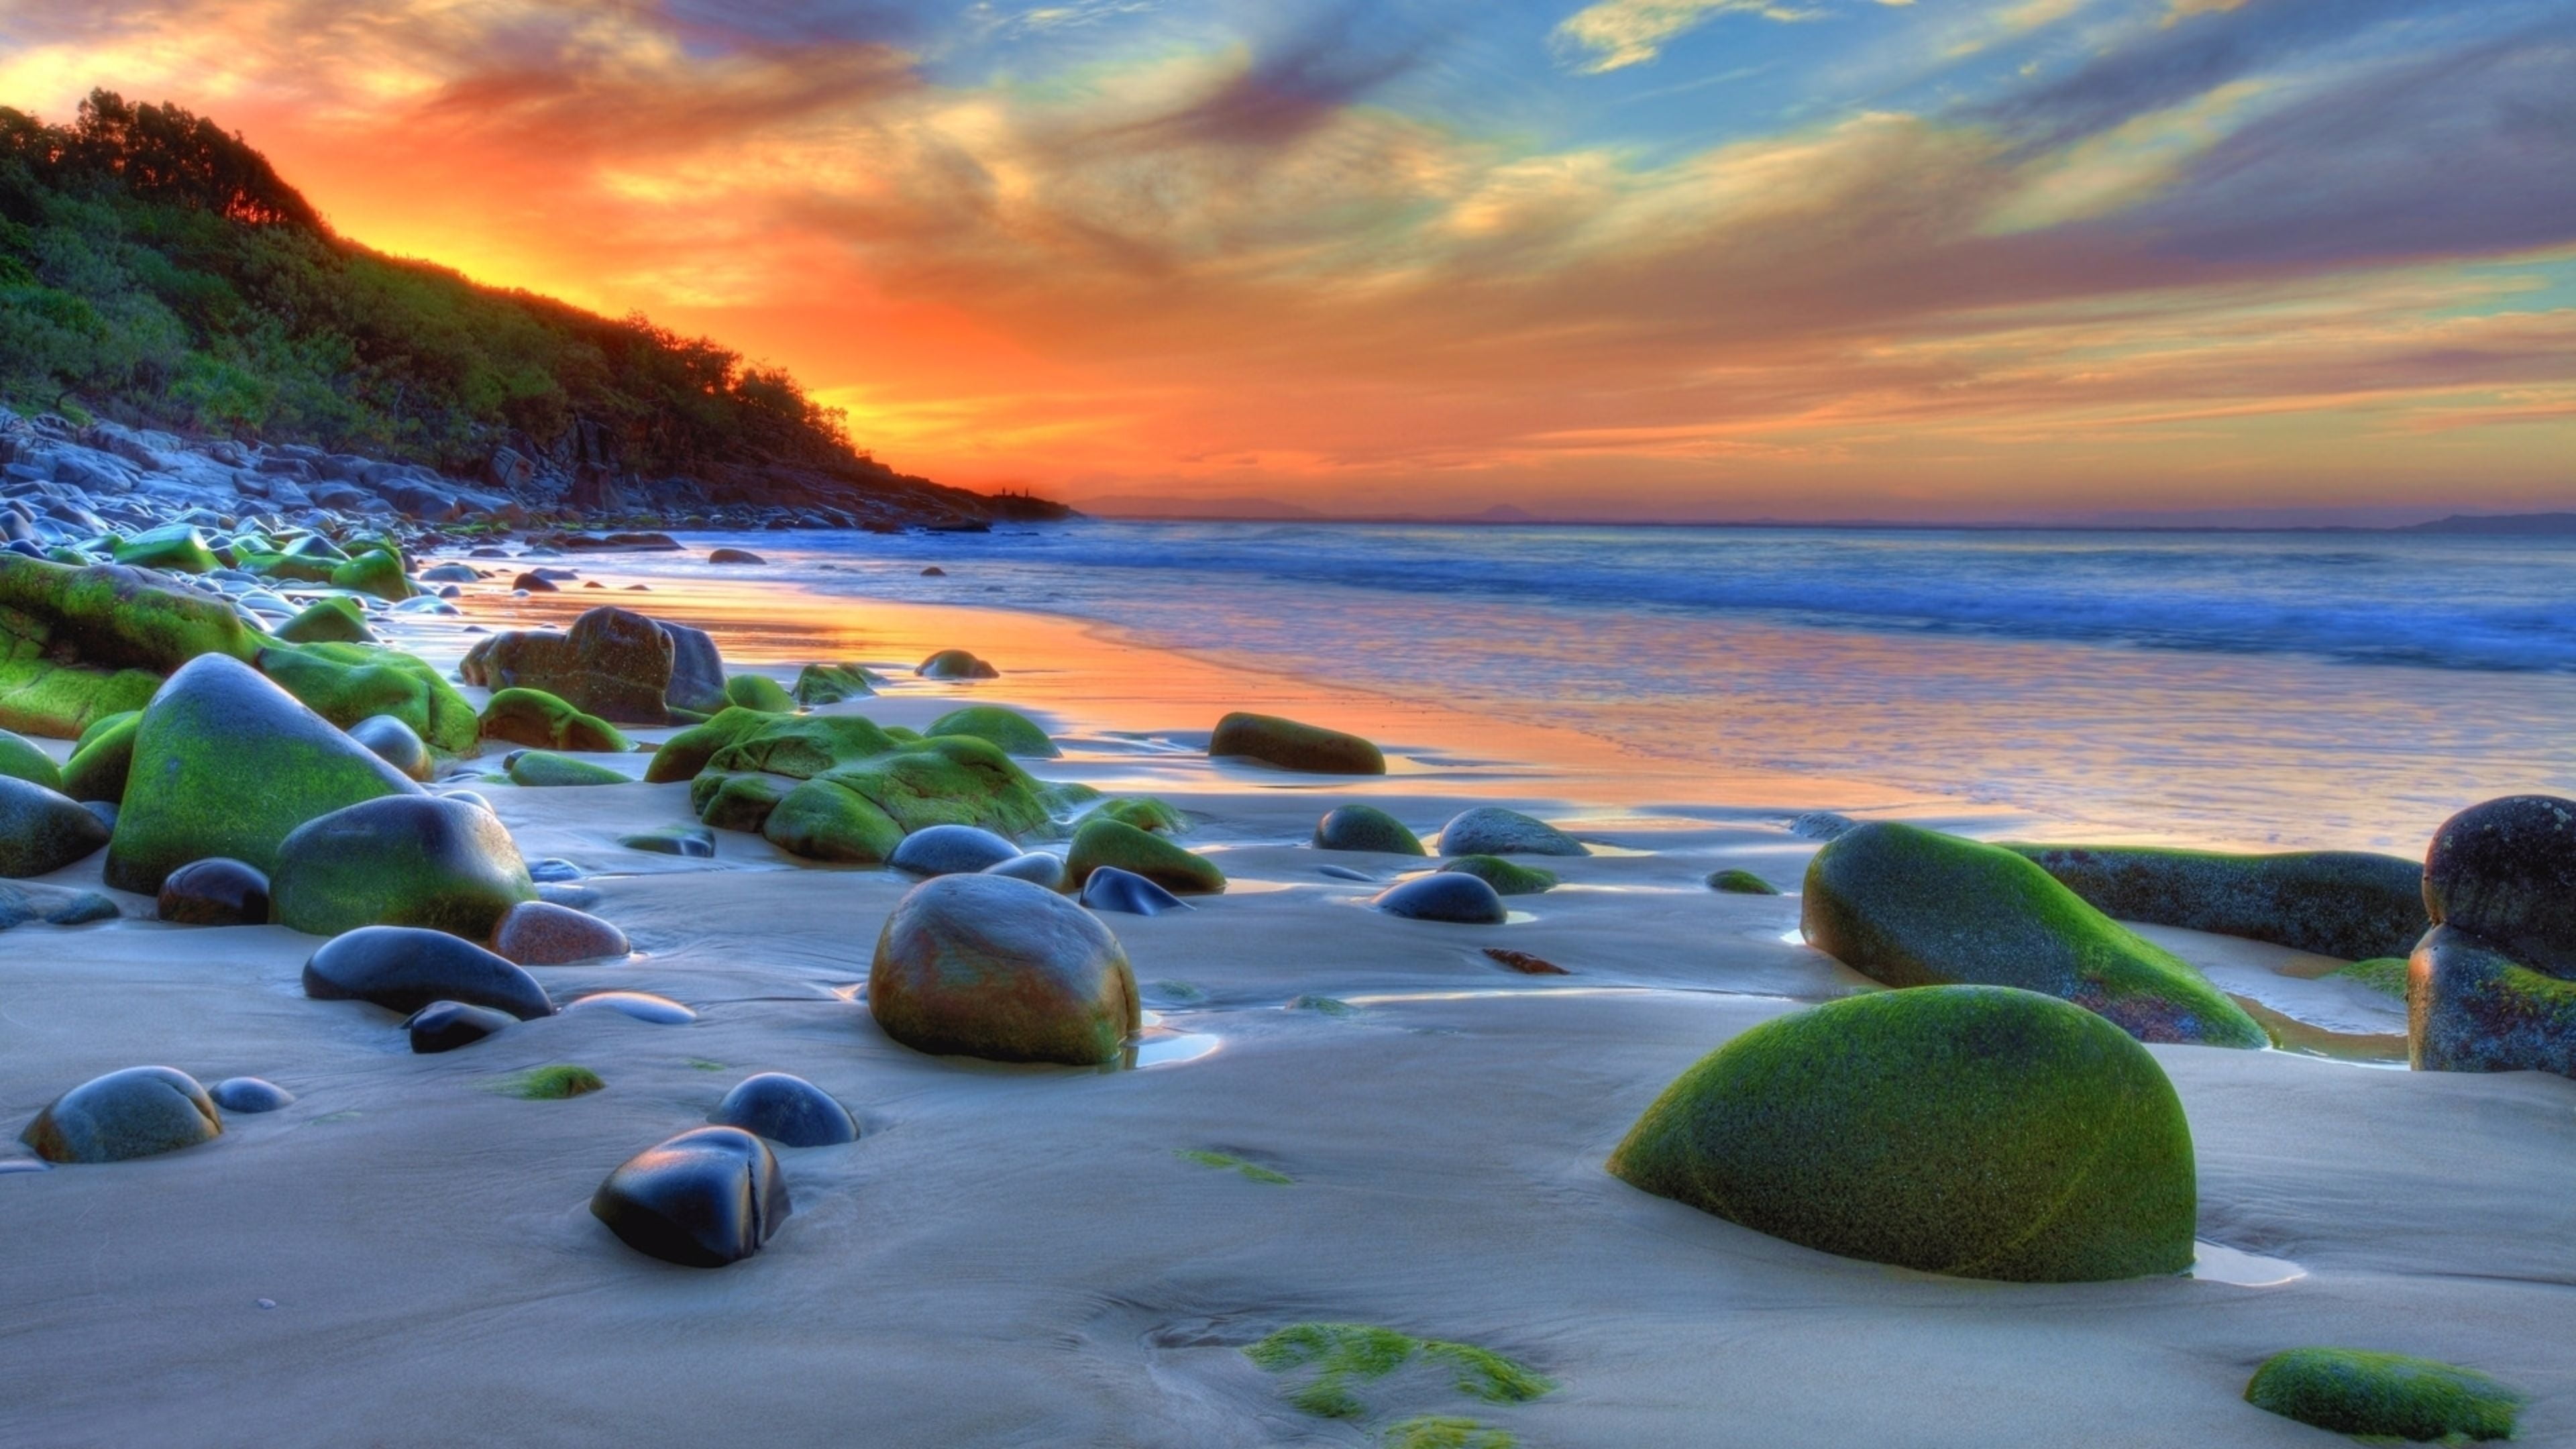 Sunset Ocean Sandy Beach Rocks Green Movi Water Nature 4k Wallpaper For Desktop Mobile Phones And Computer 3840×2160